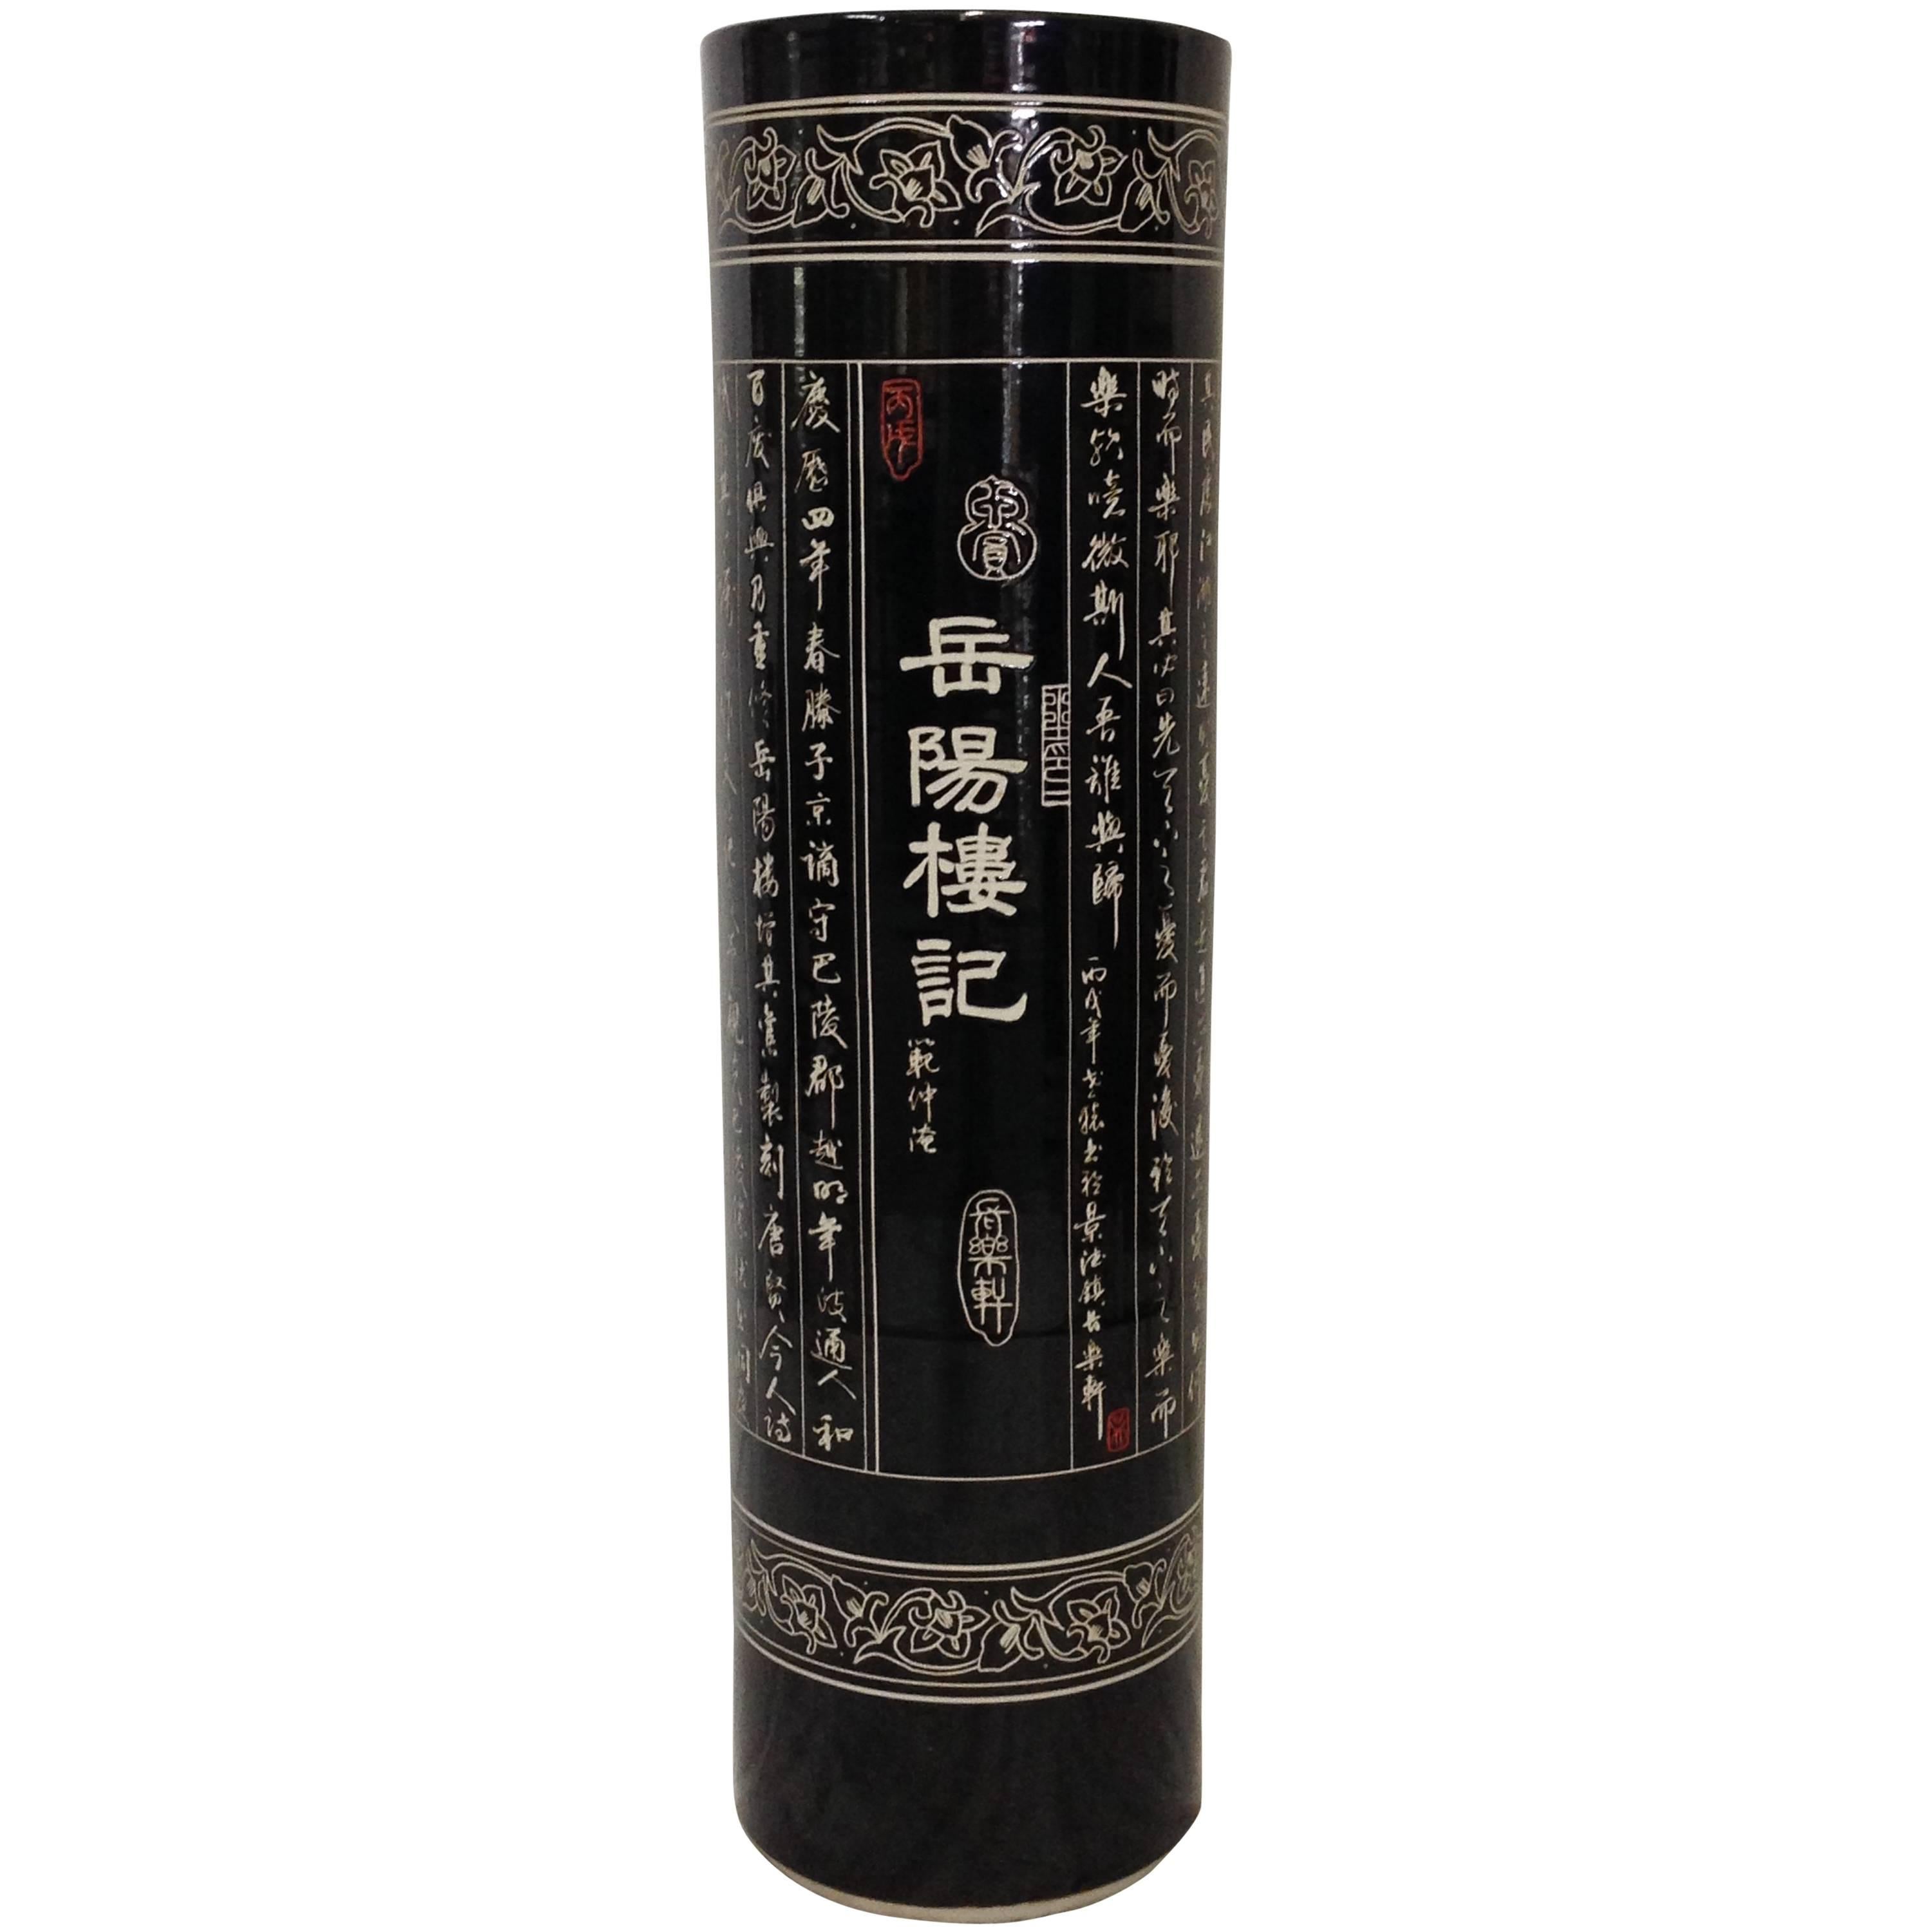 Mid-20th Century Chinese Ceramic Calligraphy Tall Umbrella Stand Vase